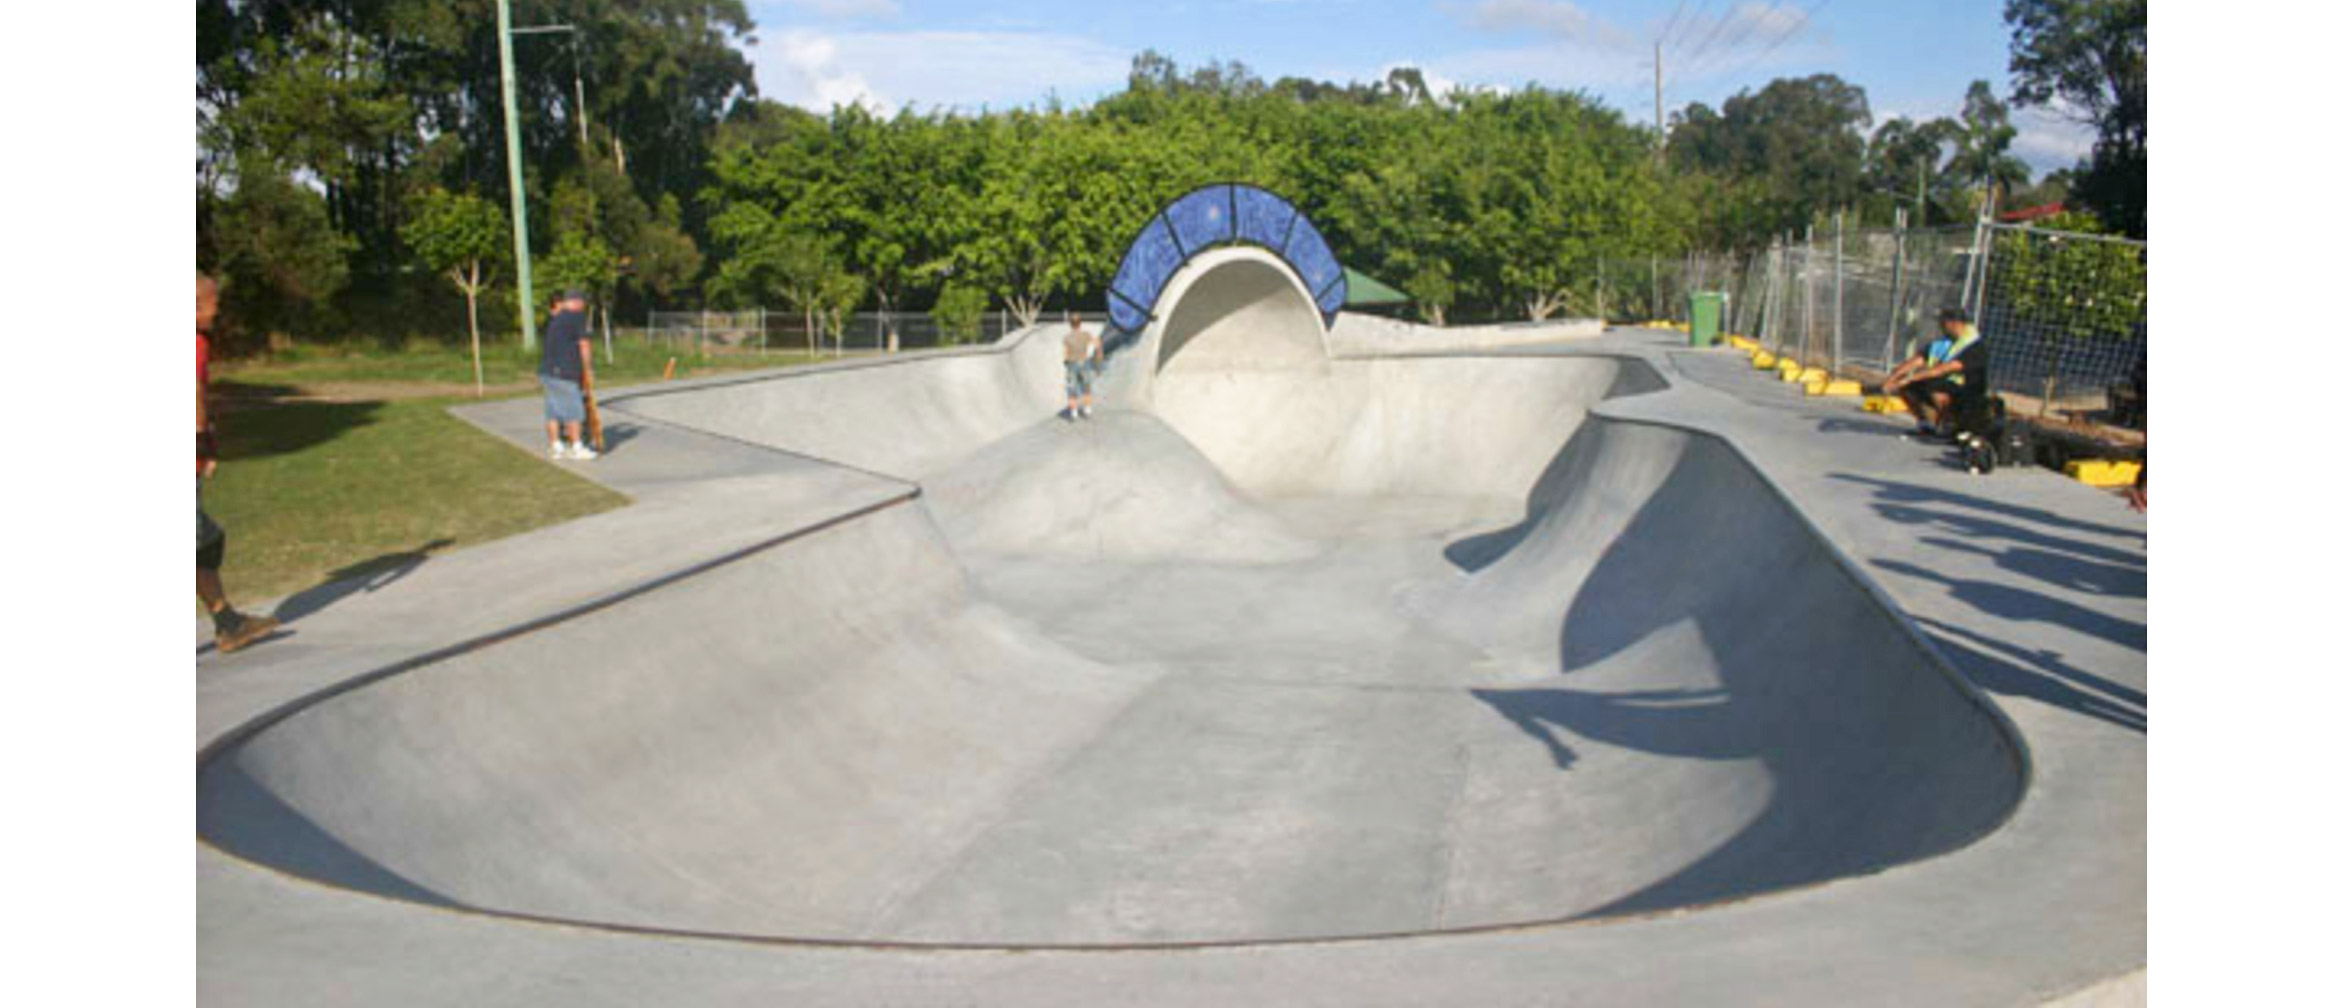 Varsity skate park bowl with cradle